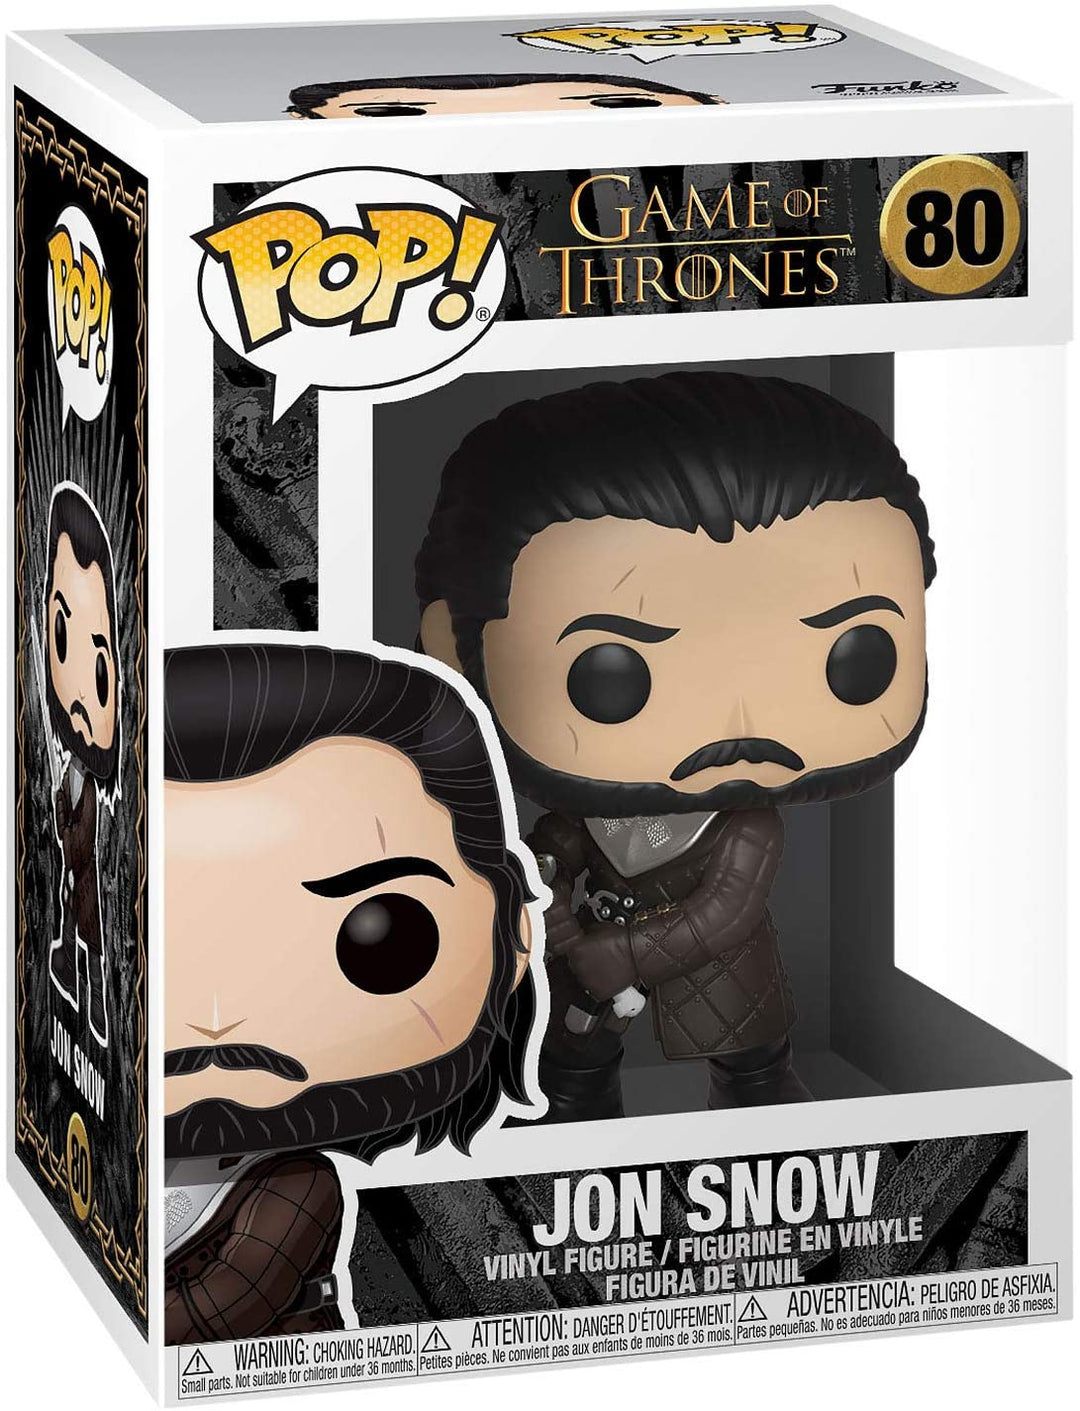 Jon Snow Game of Thrones Pop! Vinyl Figure